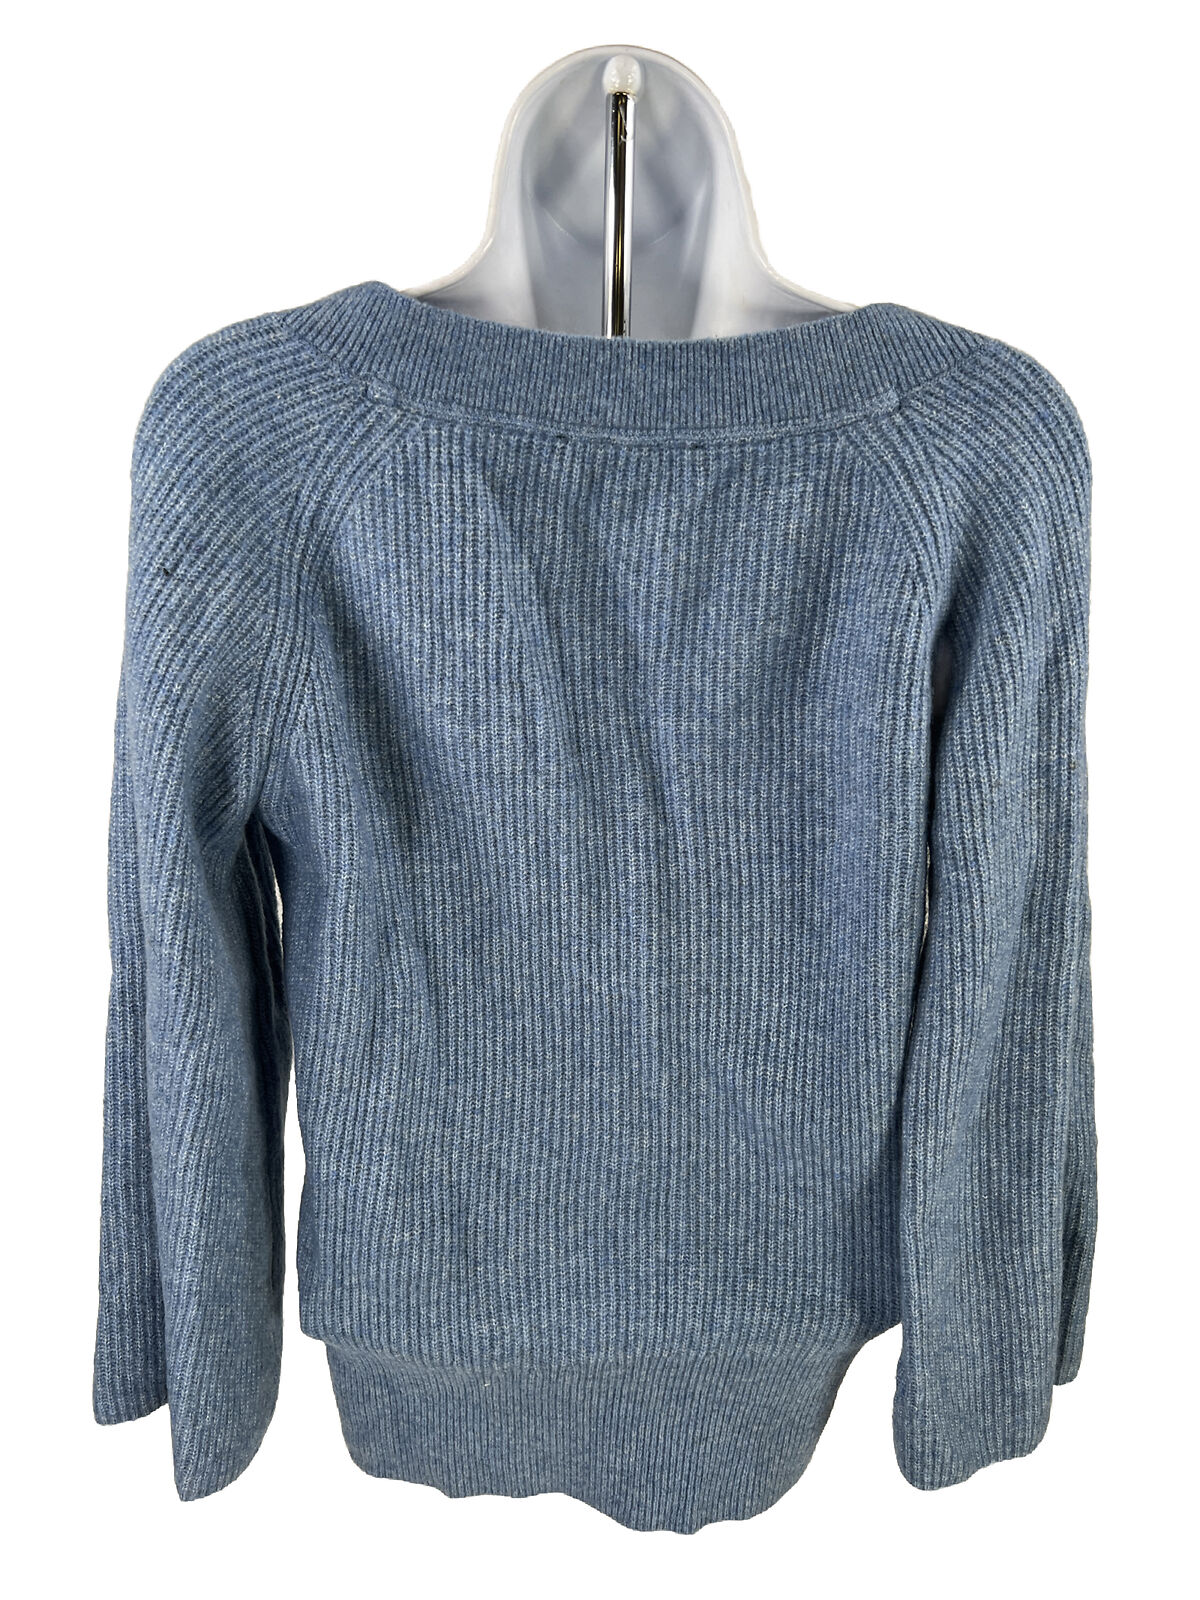 White House Black Market Suéter azul de mezcla de lana con manga 3/4 para mujer - M